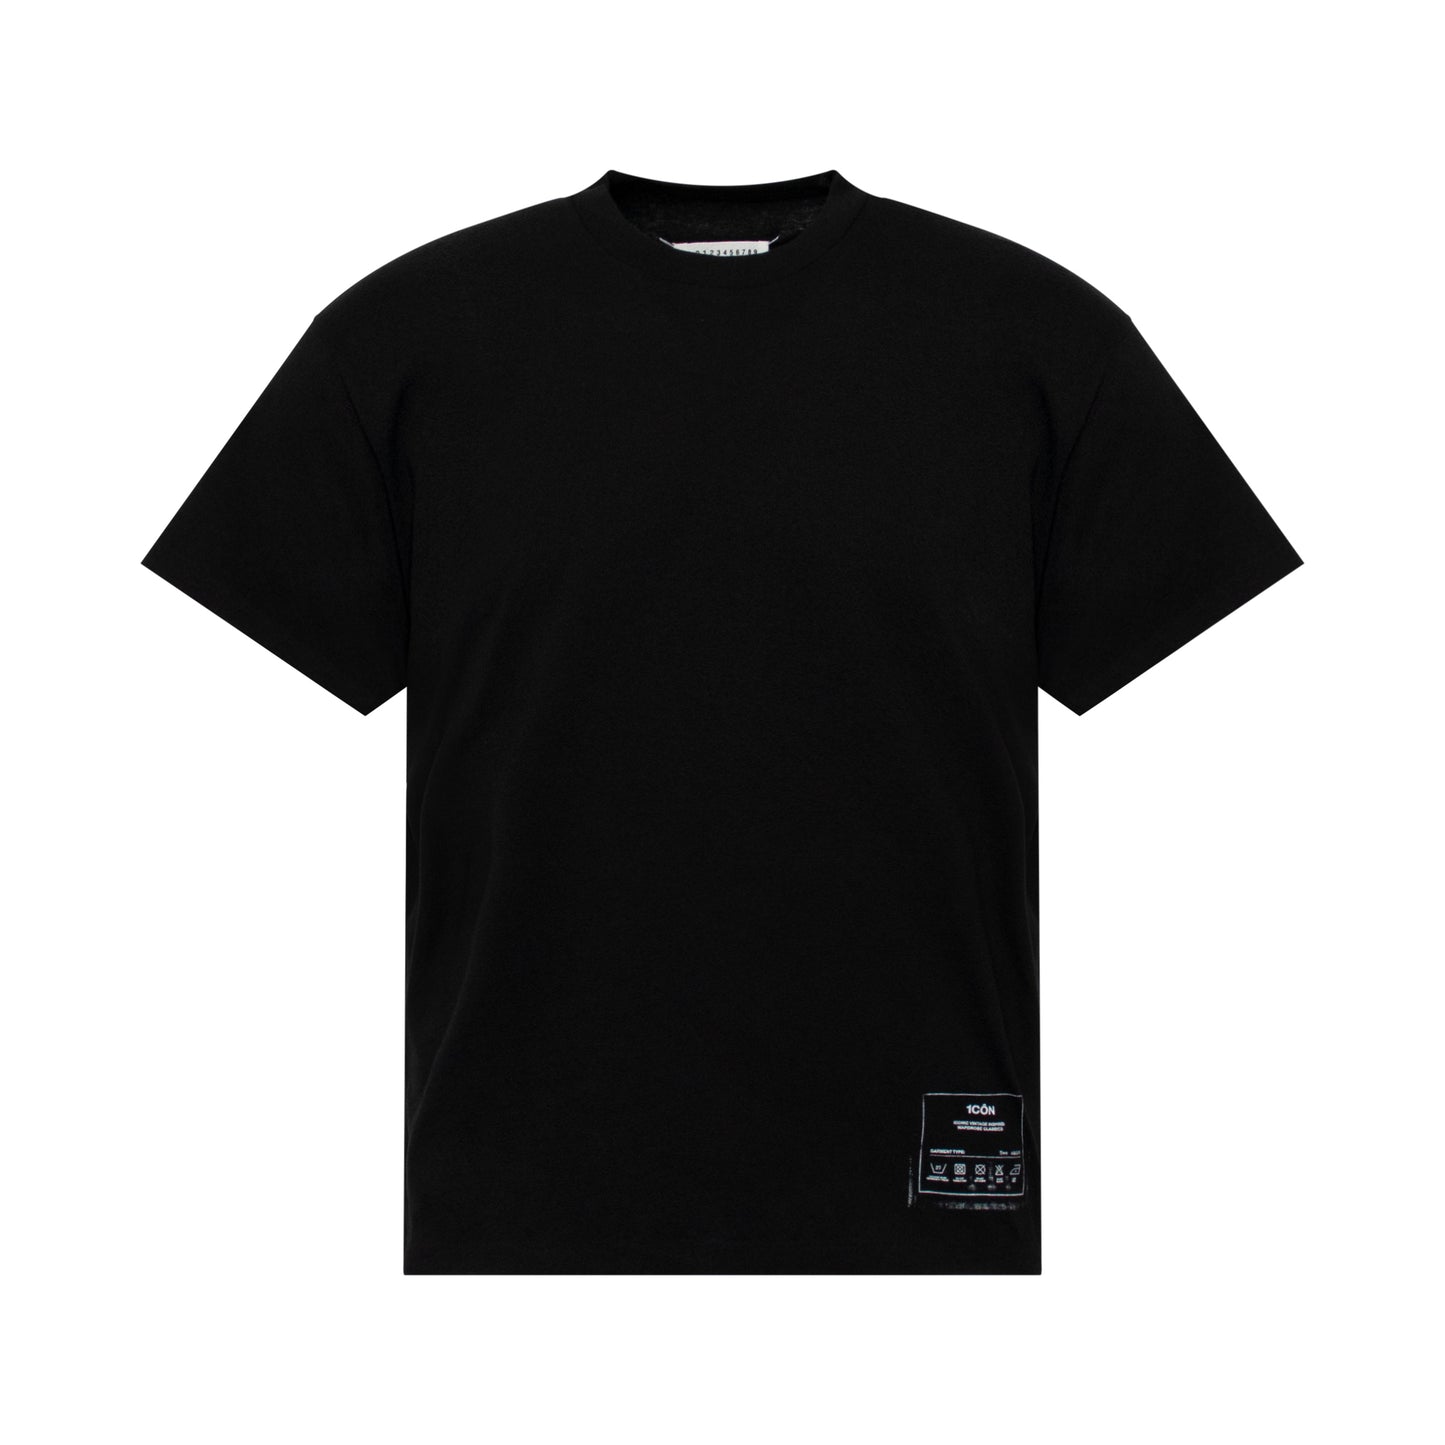 1CON Print T-Shirt in Black